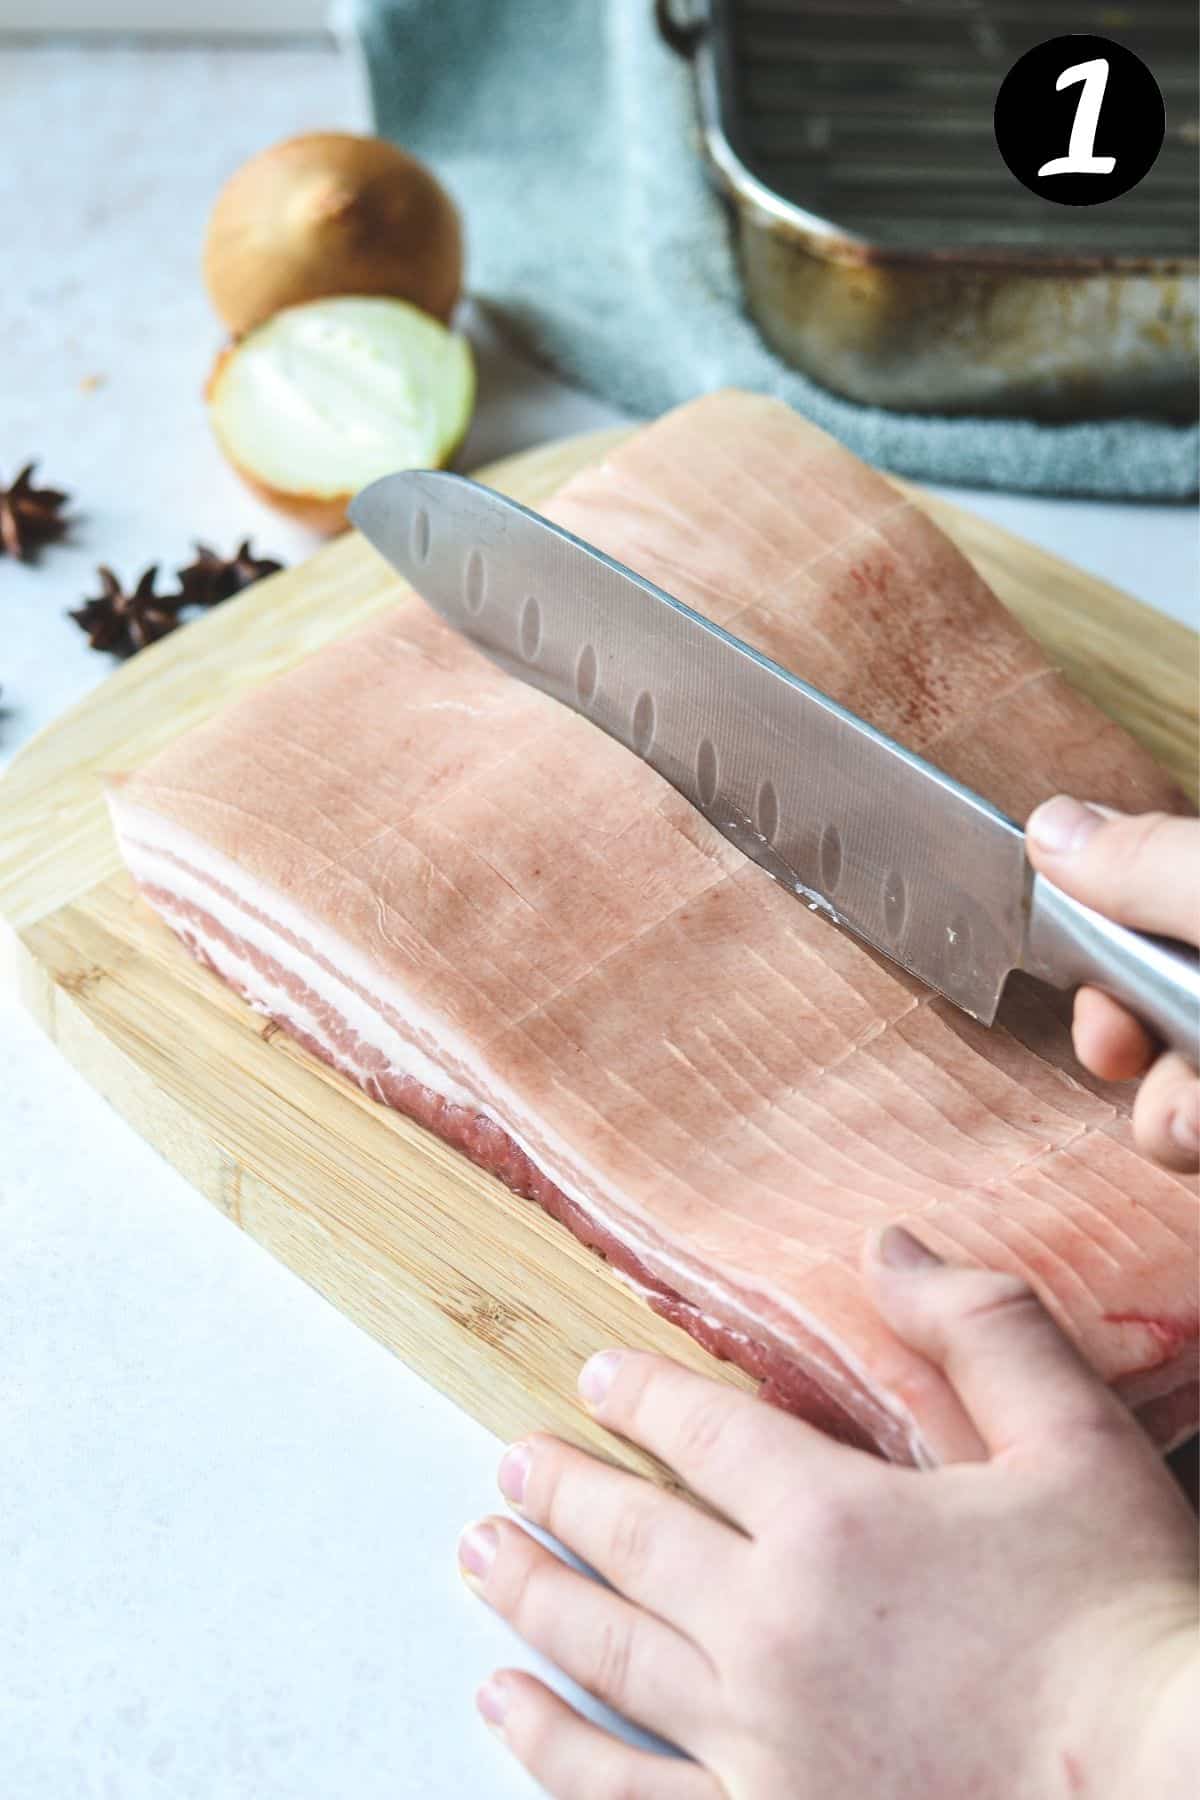 a knife scoring pork belly skin on a white bench